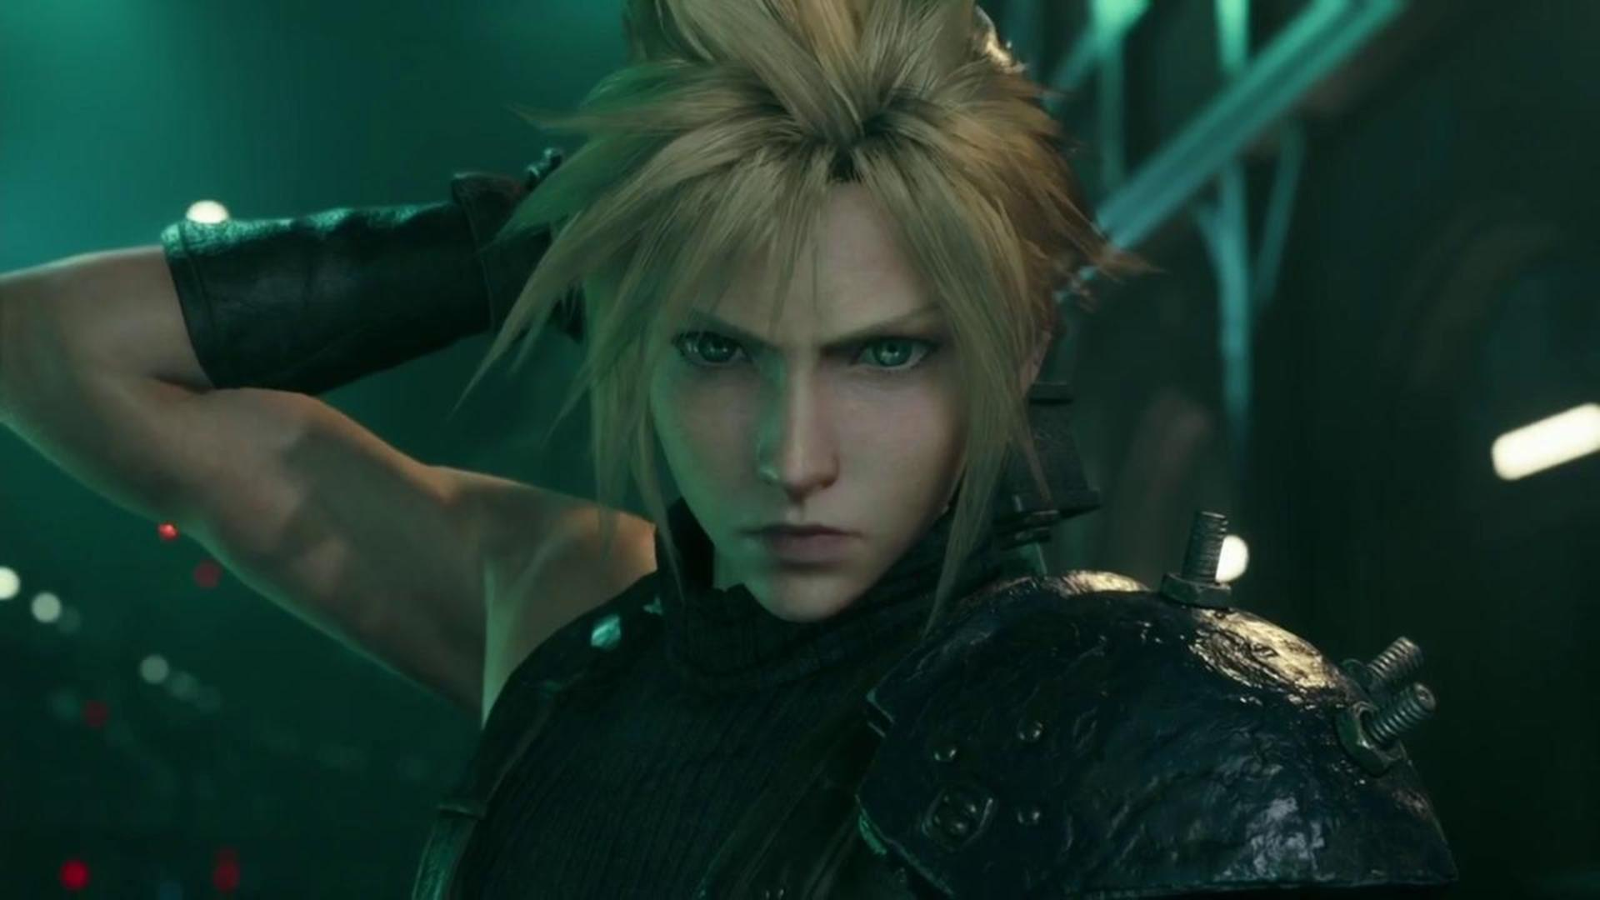 Final Fantasy VII 25th Anniversary News in June May Bring Remake Part 2